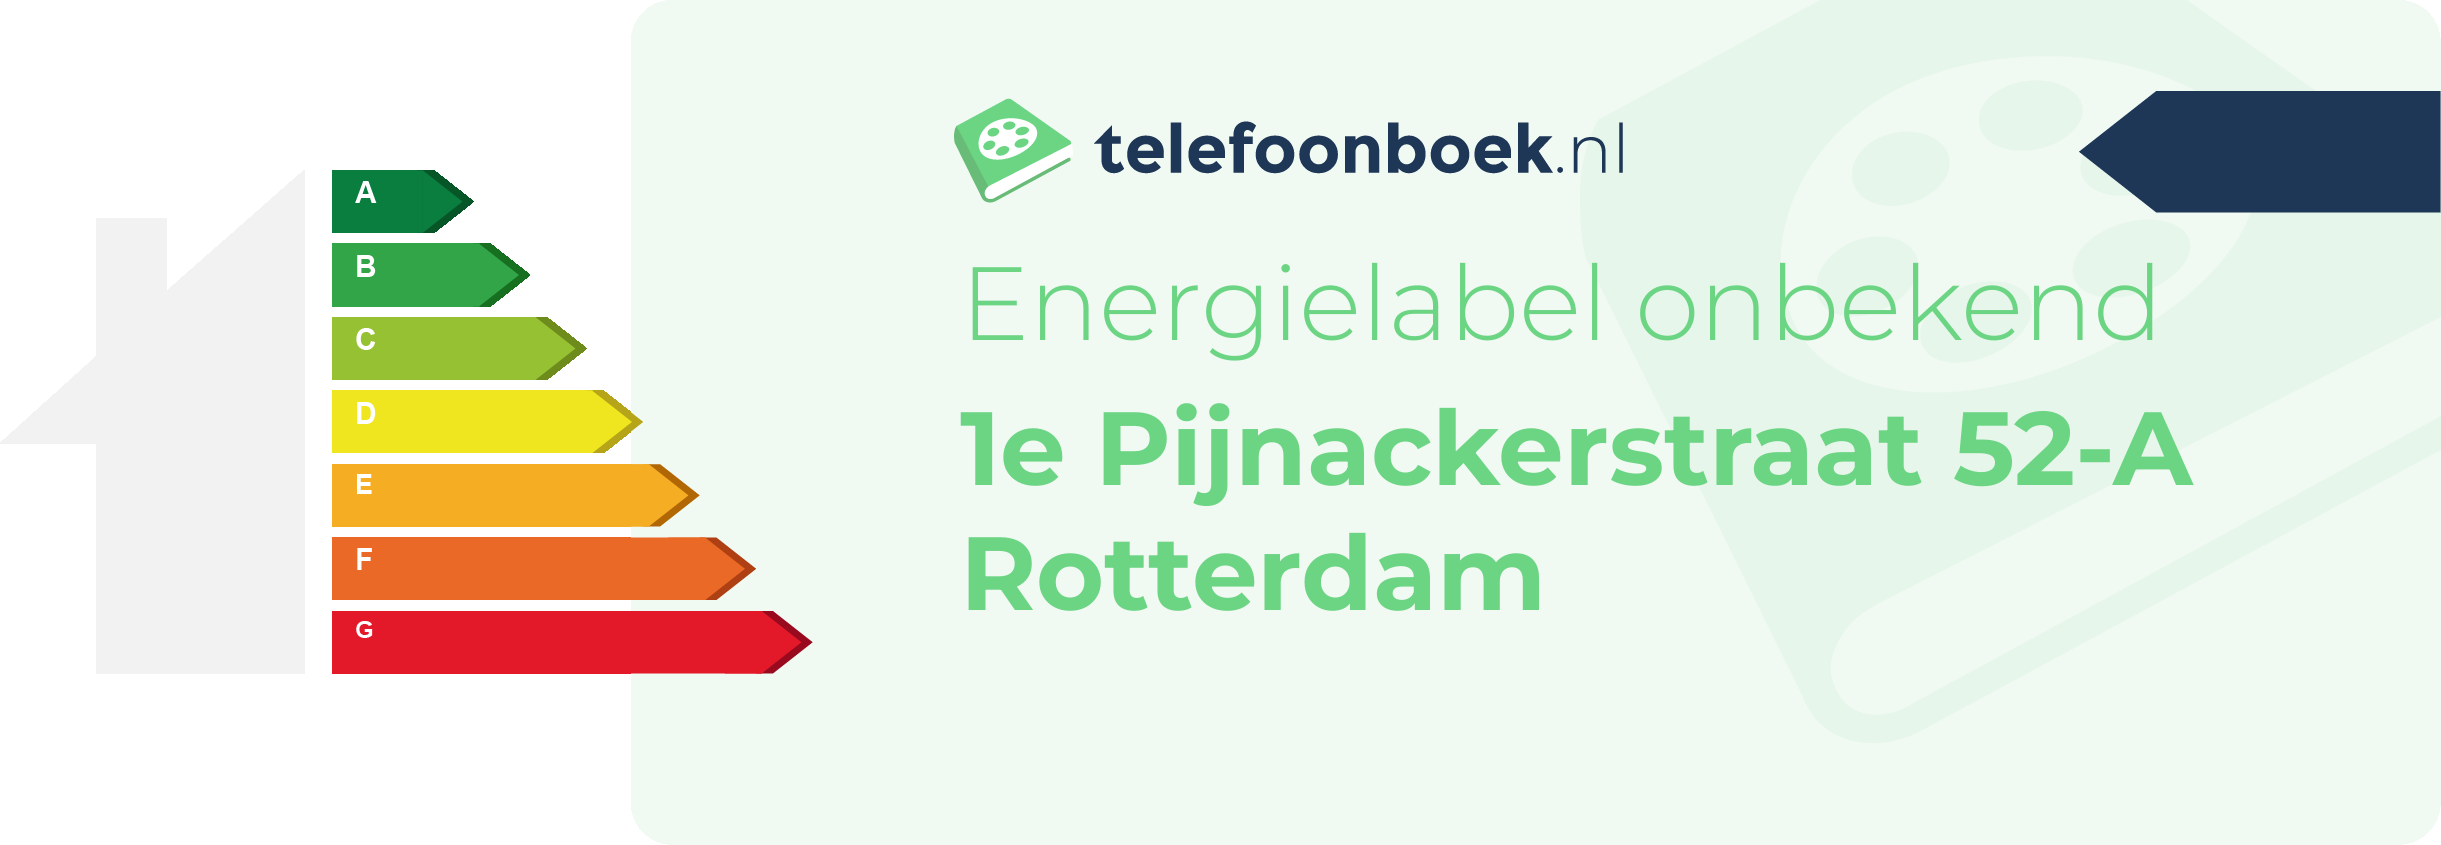 Energielabel 1e Pijnackerstraat 52-A Rotterdam